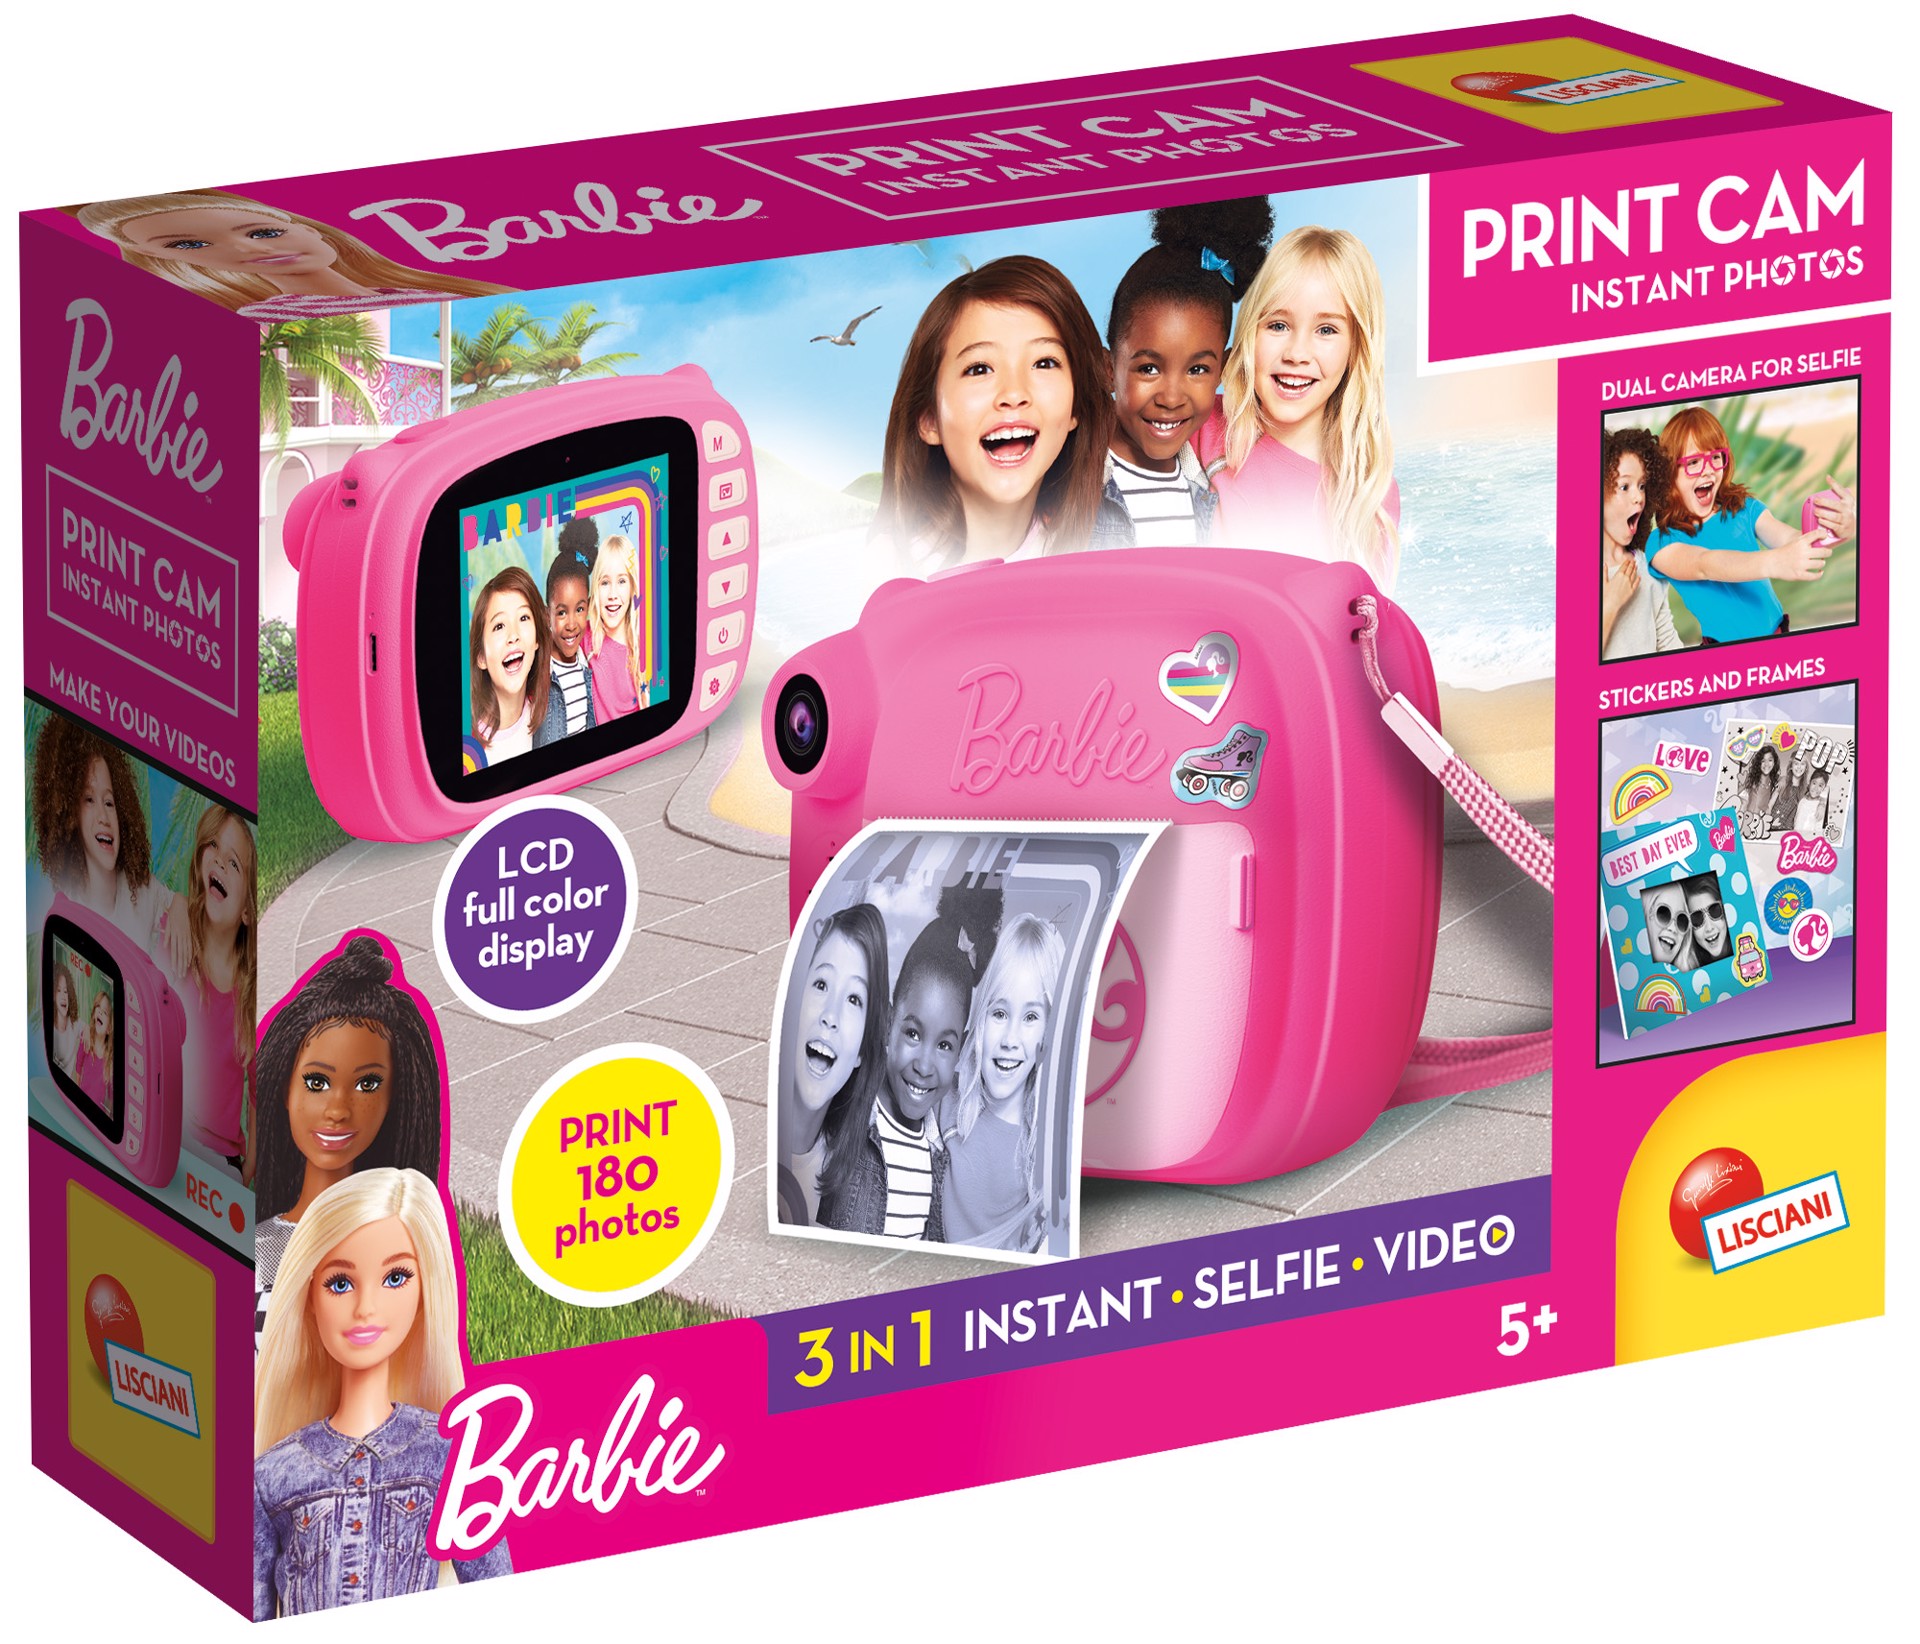 LISCIANI Barbie Print Cam Hi-Tech Display 6